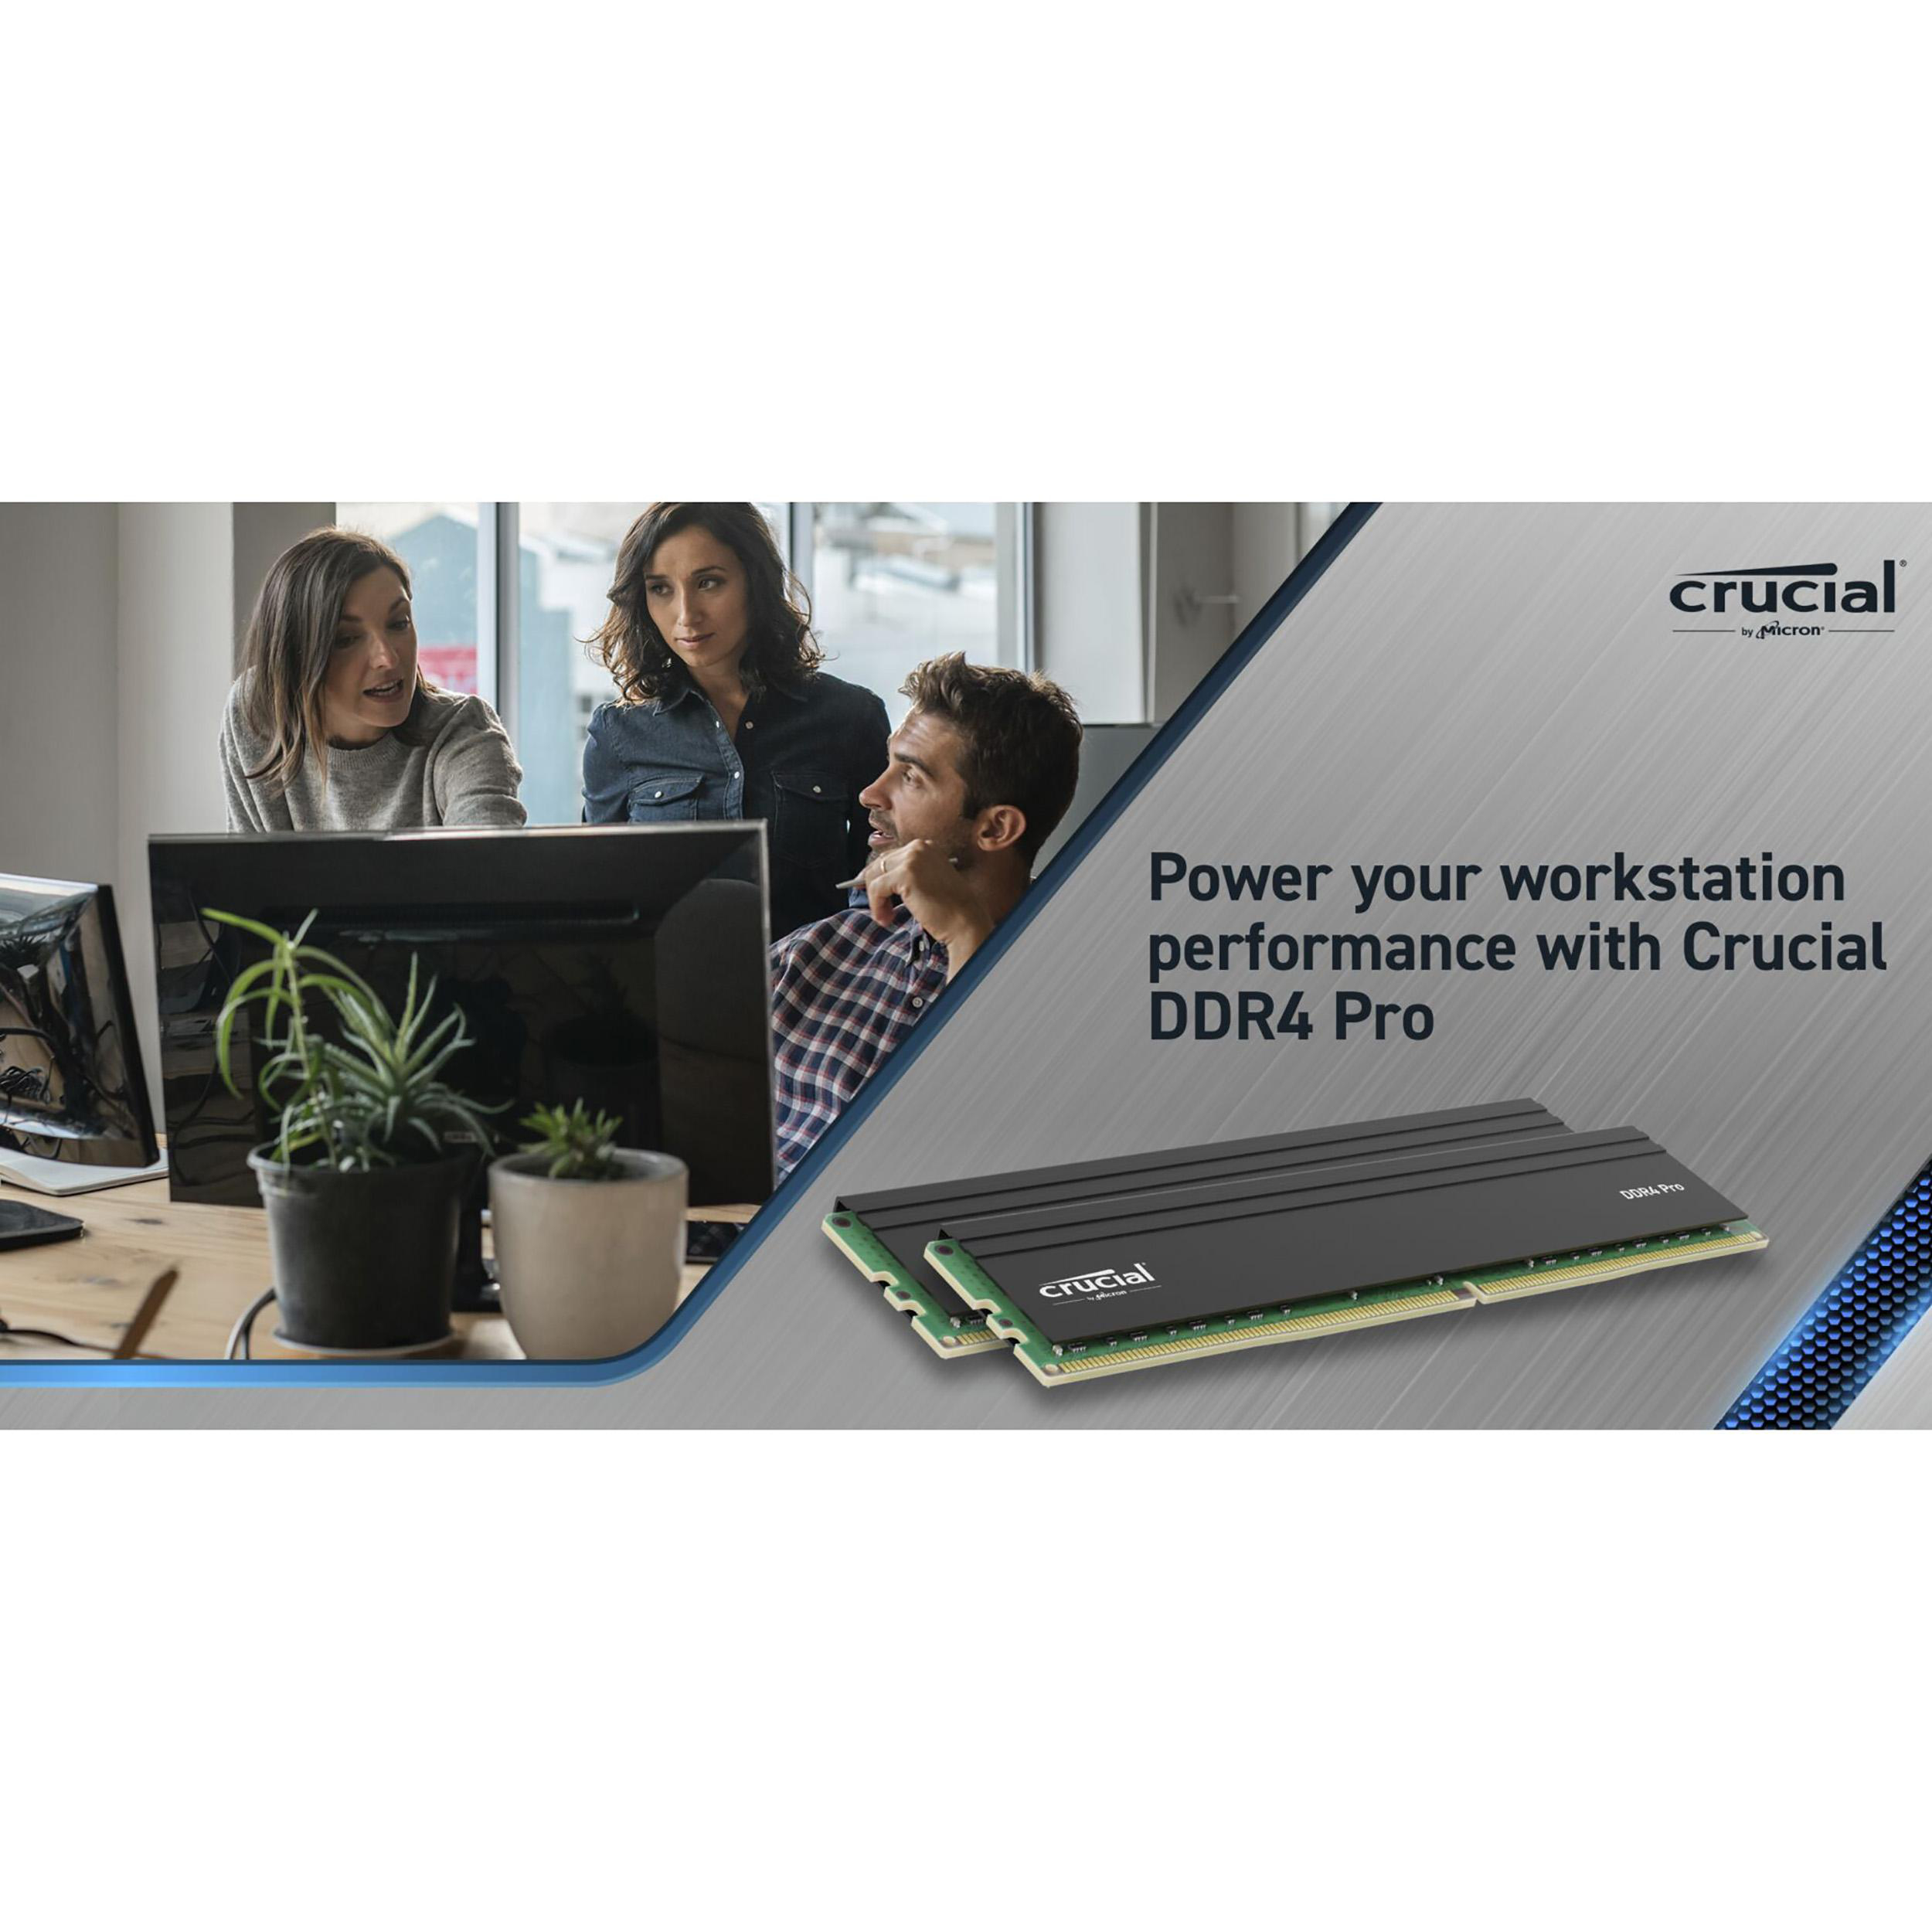 CRUCIAL Pro DDR4-3200 Kit Arbeitsspeicher DDR4 GB 32 PC